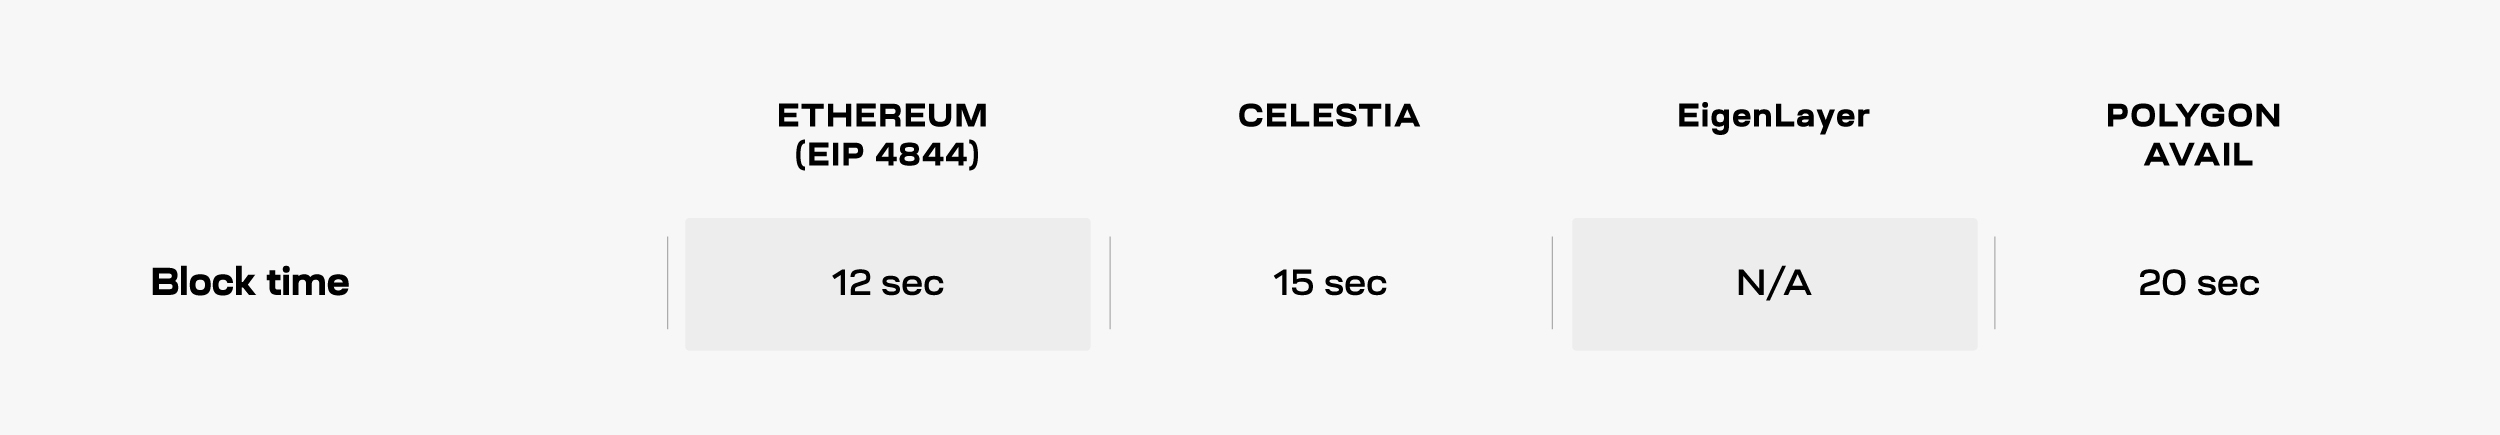 Celestia_Comparison_table_separated_block-time